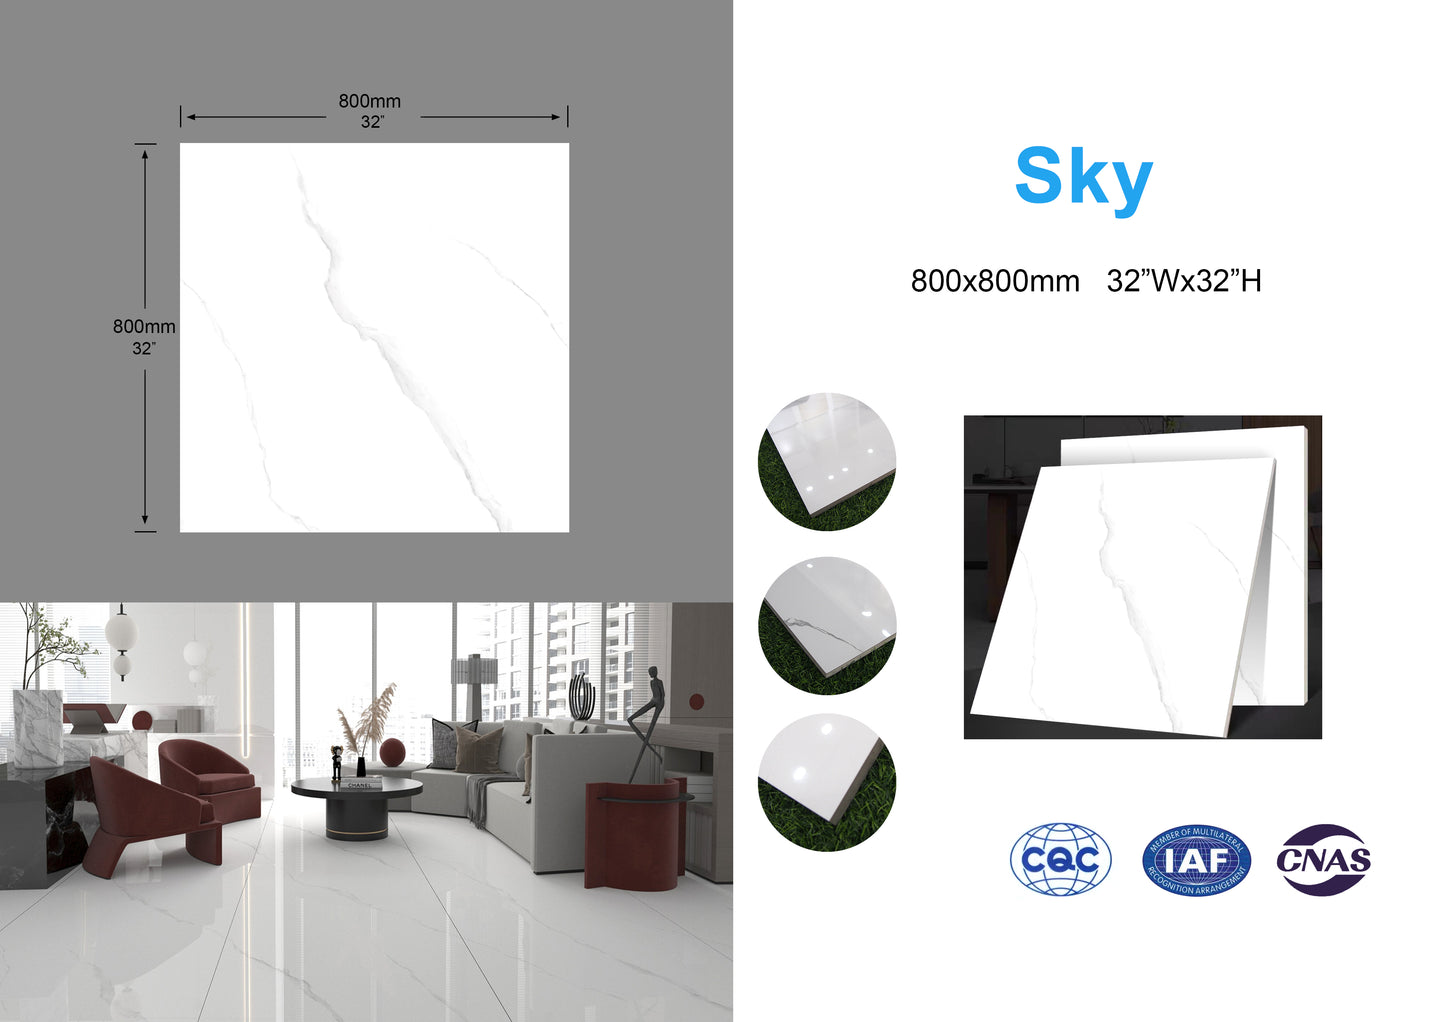 Sky family Full Polished Glazed Tile 32"x32" 3pcs/box 21.33sf/box $1.69/sf (15 days return/exchange) Bulk Deal 1000sf+ $1.59/SF(No return/no exchange)